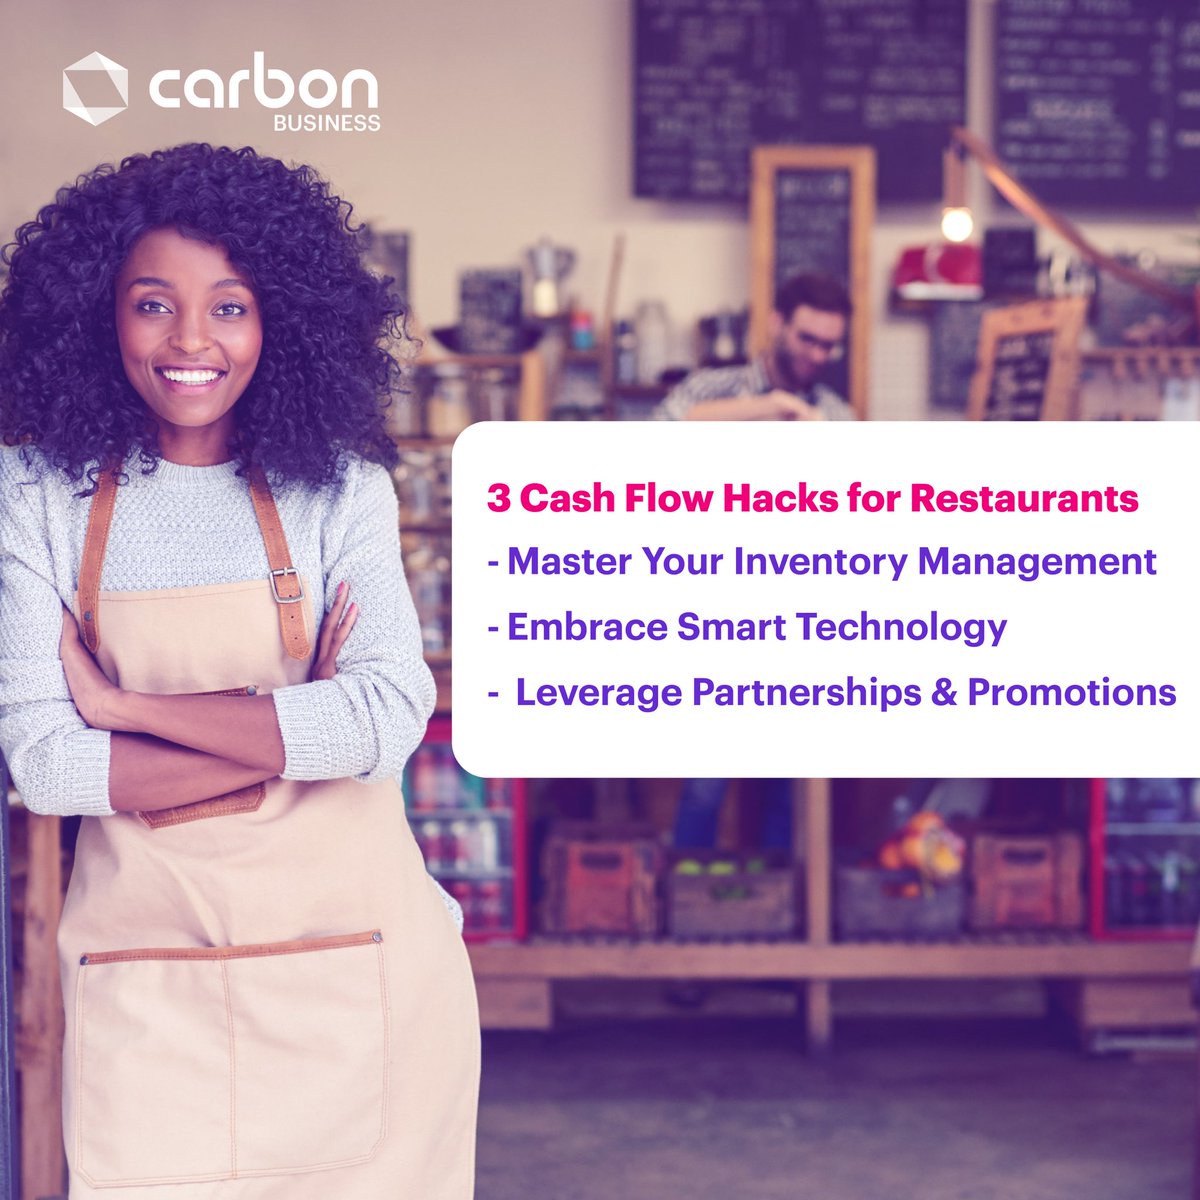 Mention your friend who owns a restaurant. 

#FinTech #Nigeria #BusinessBanking #EntrepreneurLife #startup #businessgrowth  #smefinance #smallbusiness #customer #growth